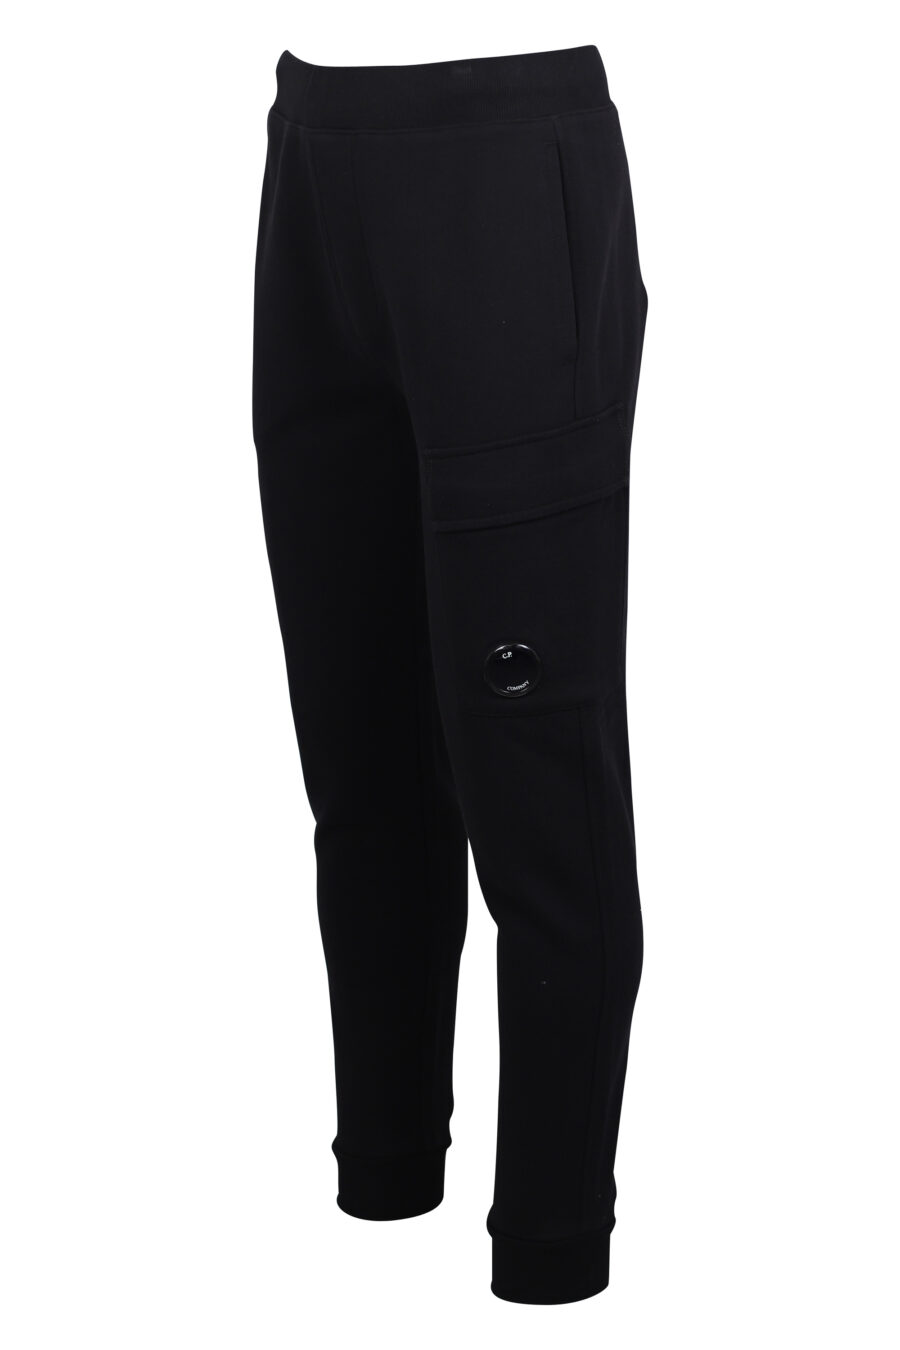 Pantalón negro cargo con bolsillos diagonales y minilogo circular - IMG 2473